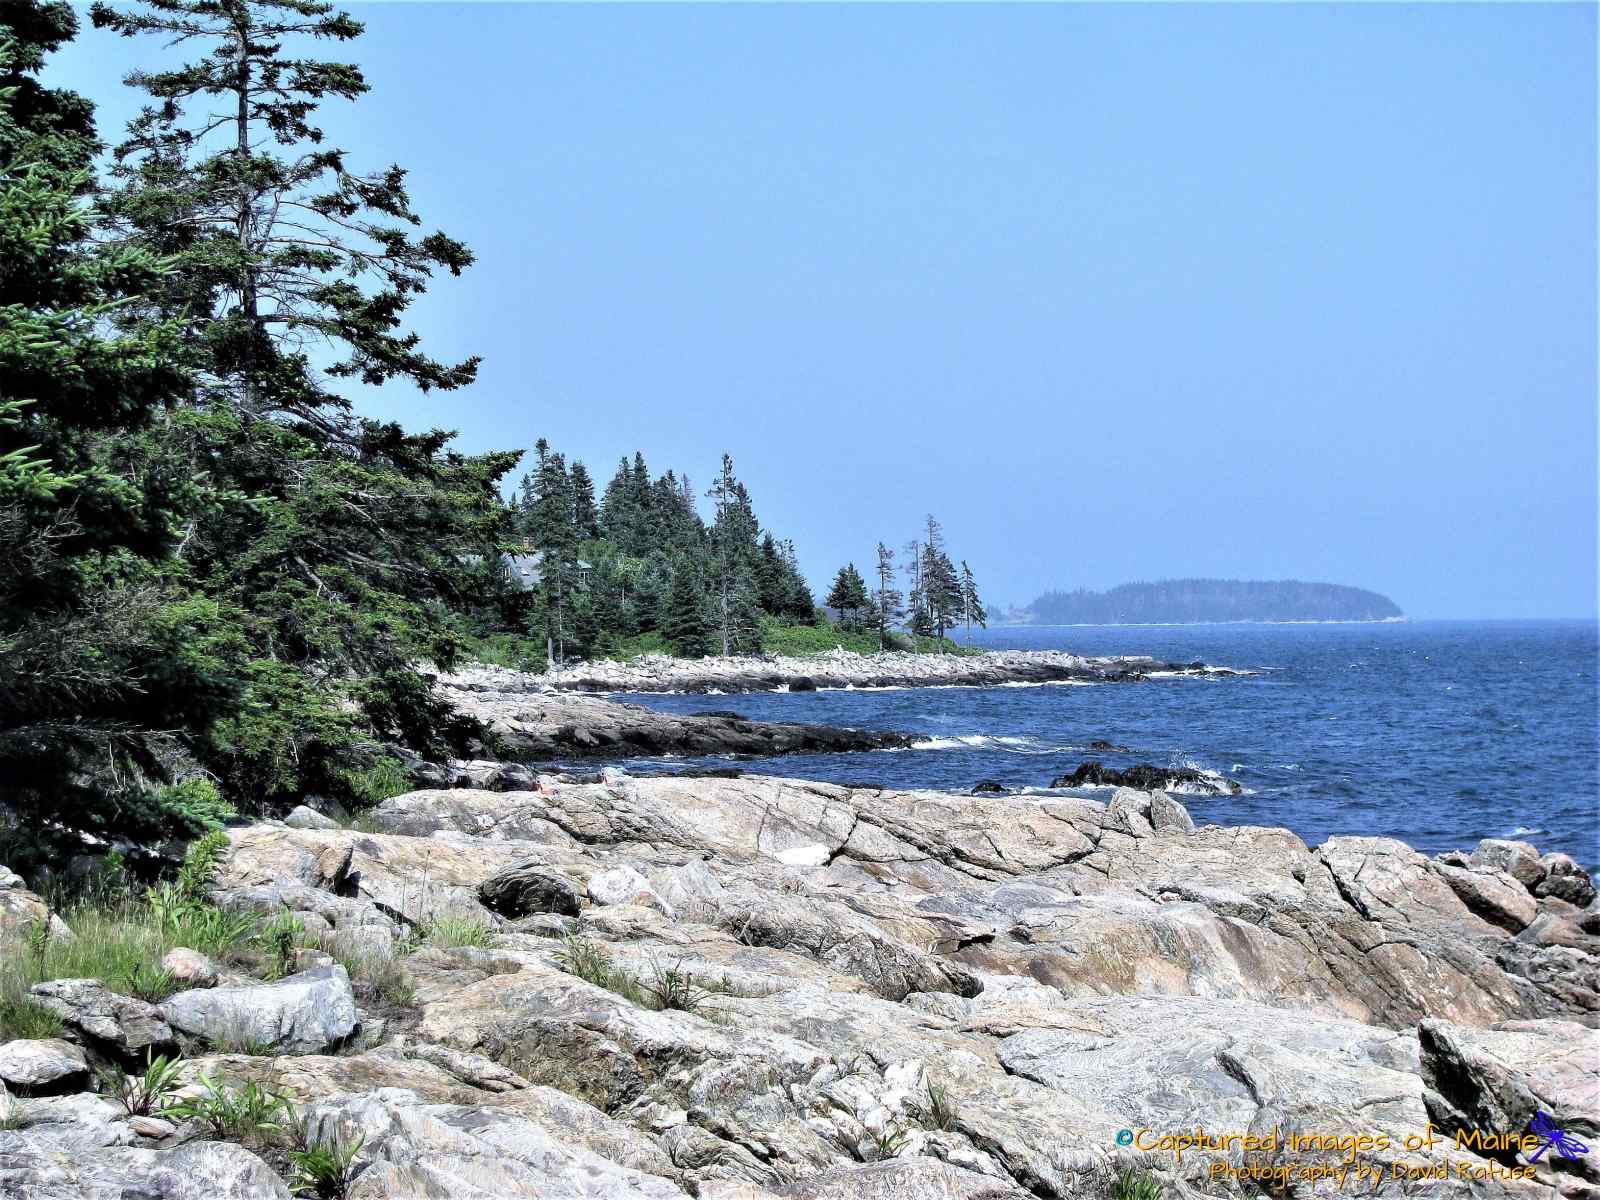 Fave Coastal - Captured Images of Maine